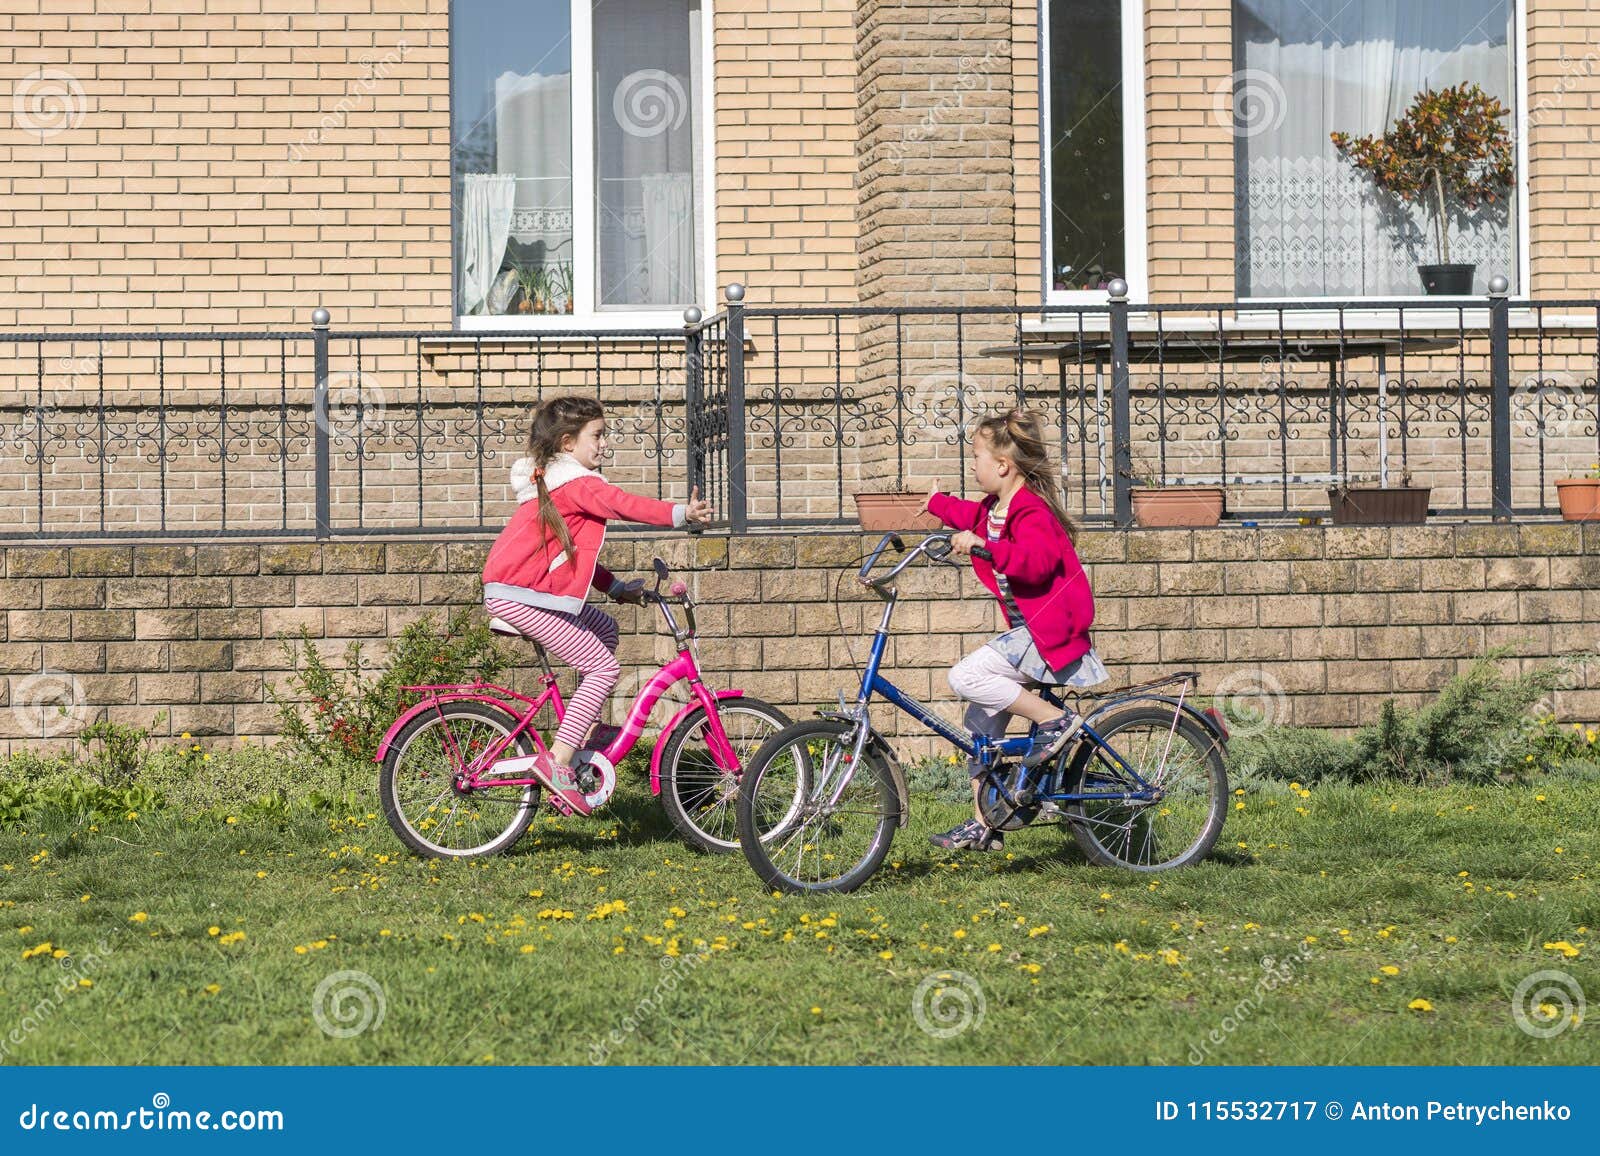 Sister ride. 2 Девочки на велосипеде. Две девочки едут на велосипеде. Ребенок на велосипеде едет в школу. Едут на велосипеде на багажнике с ребенком.